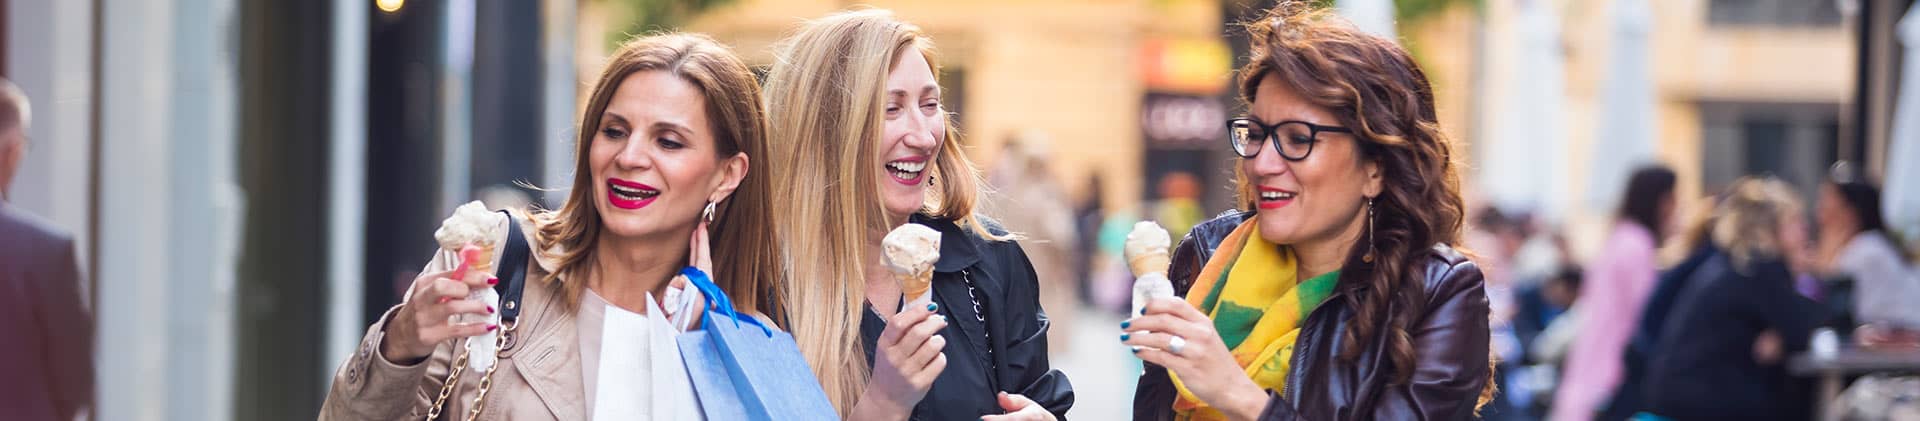 3 women enjoying ice cream on the street